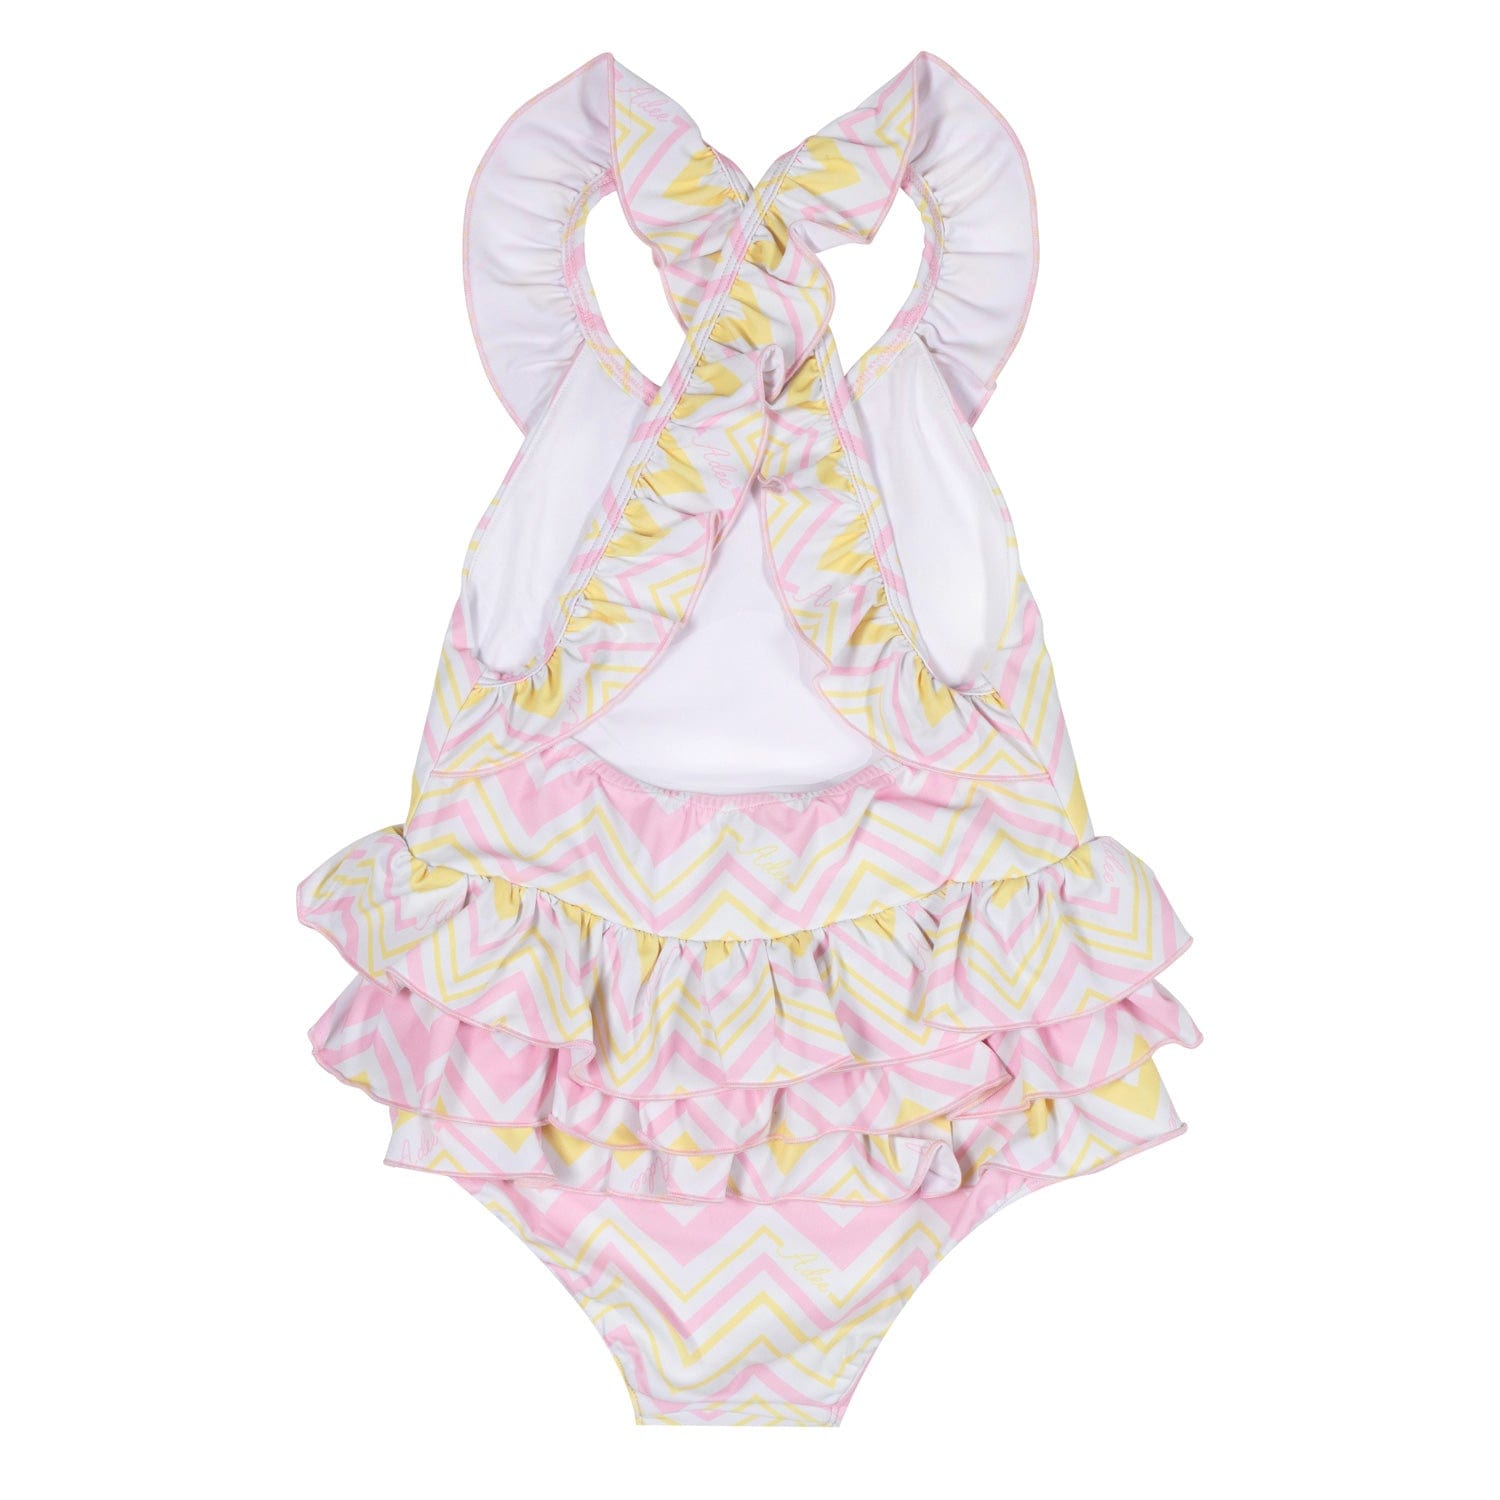 A-Dee Coats & Jackets S241802-1001 Adee Girls Ariel – Pink Fairy Chevron Print Swimsuit